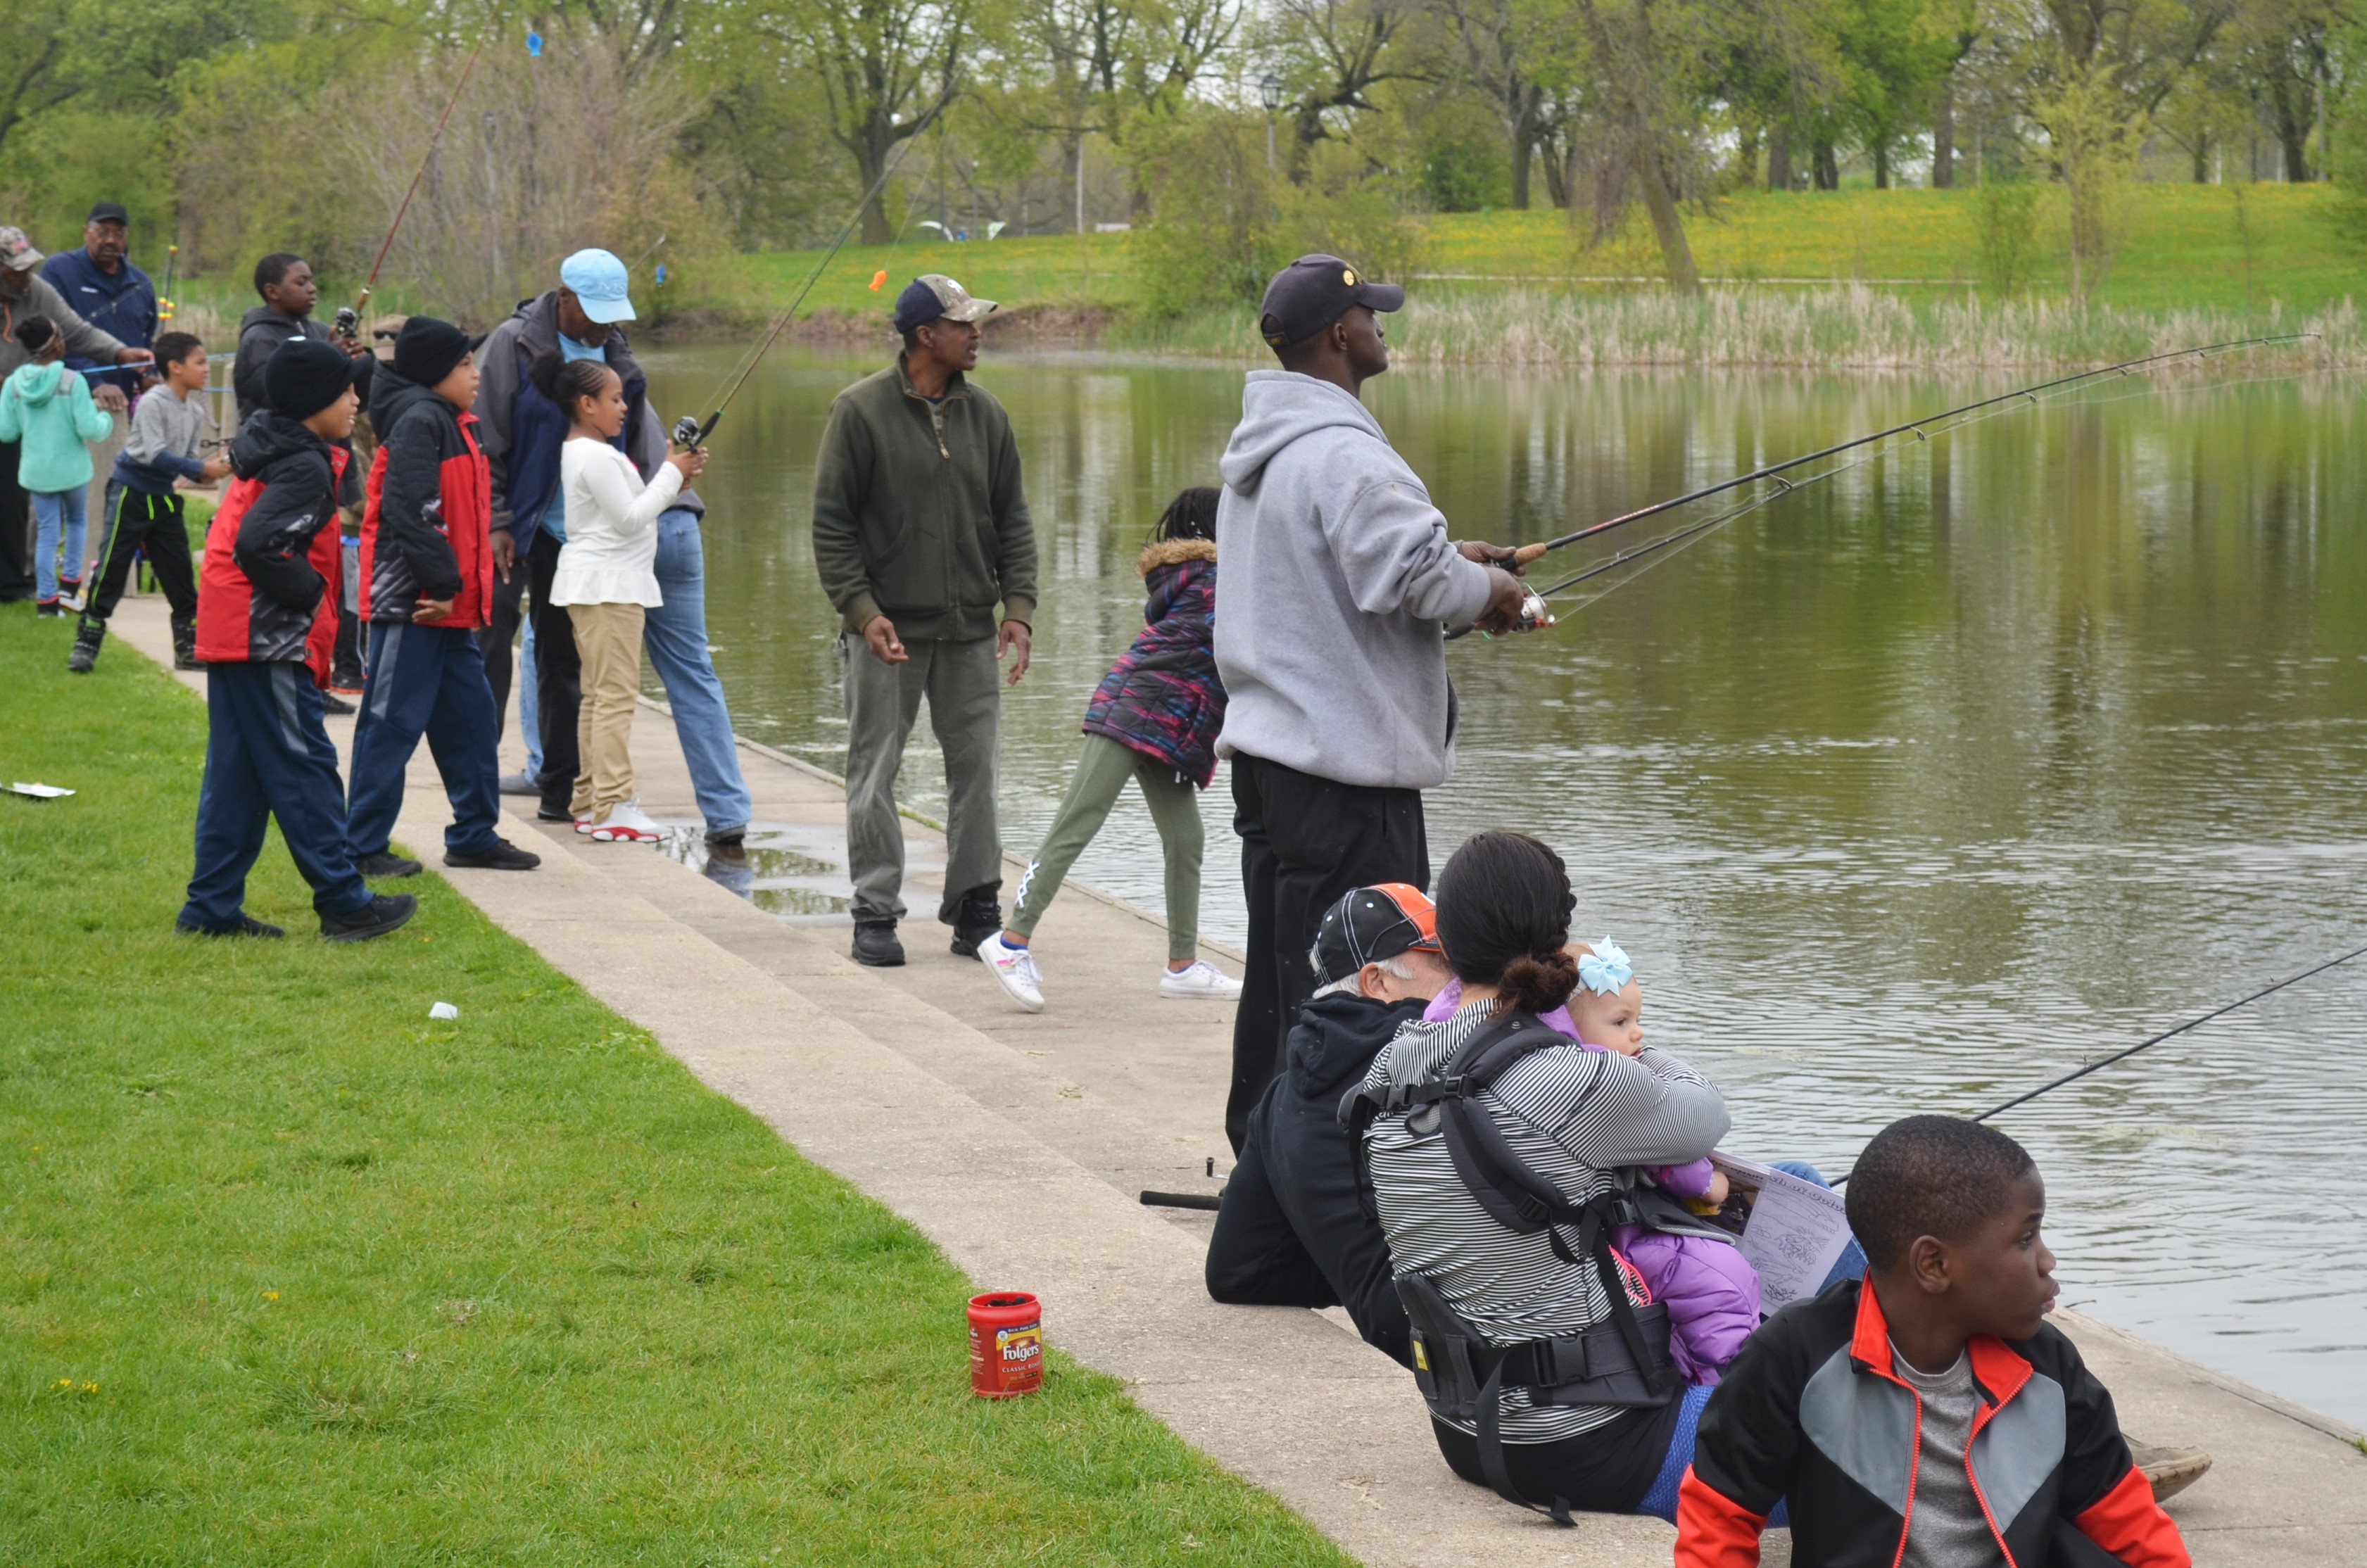 Photo Gallery: Fishing and Fun at the Washington Park Pond » Urban